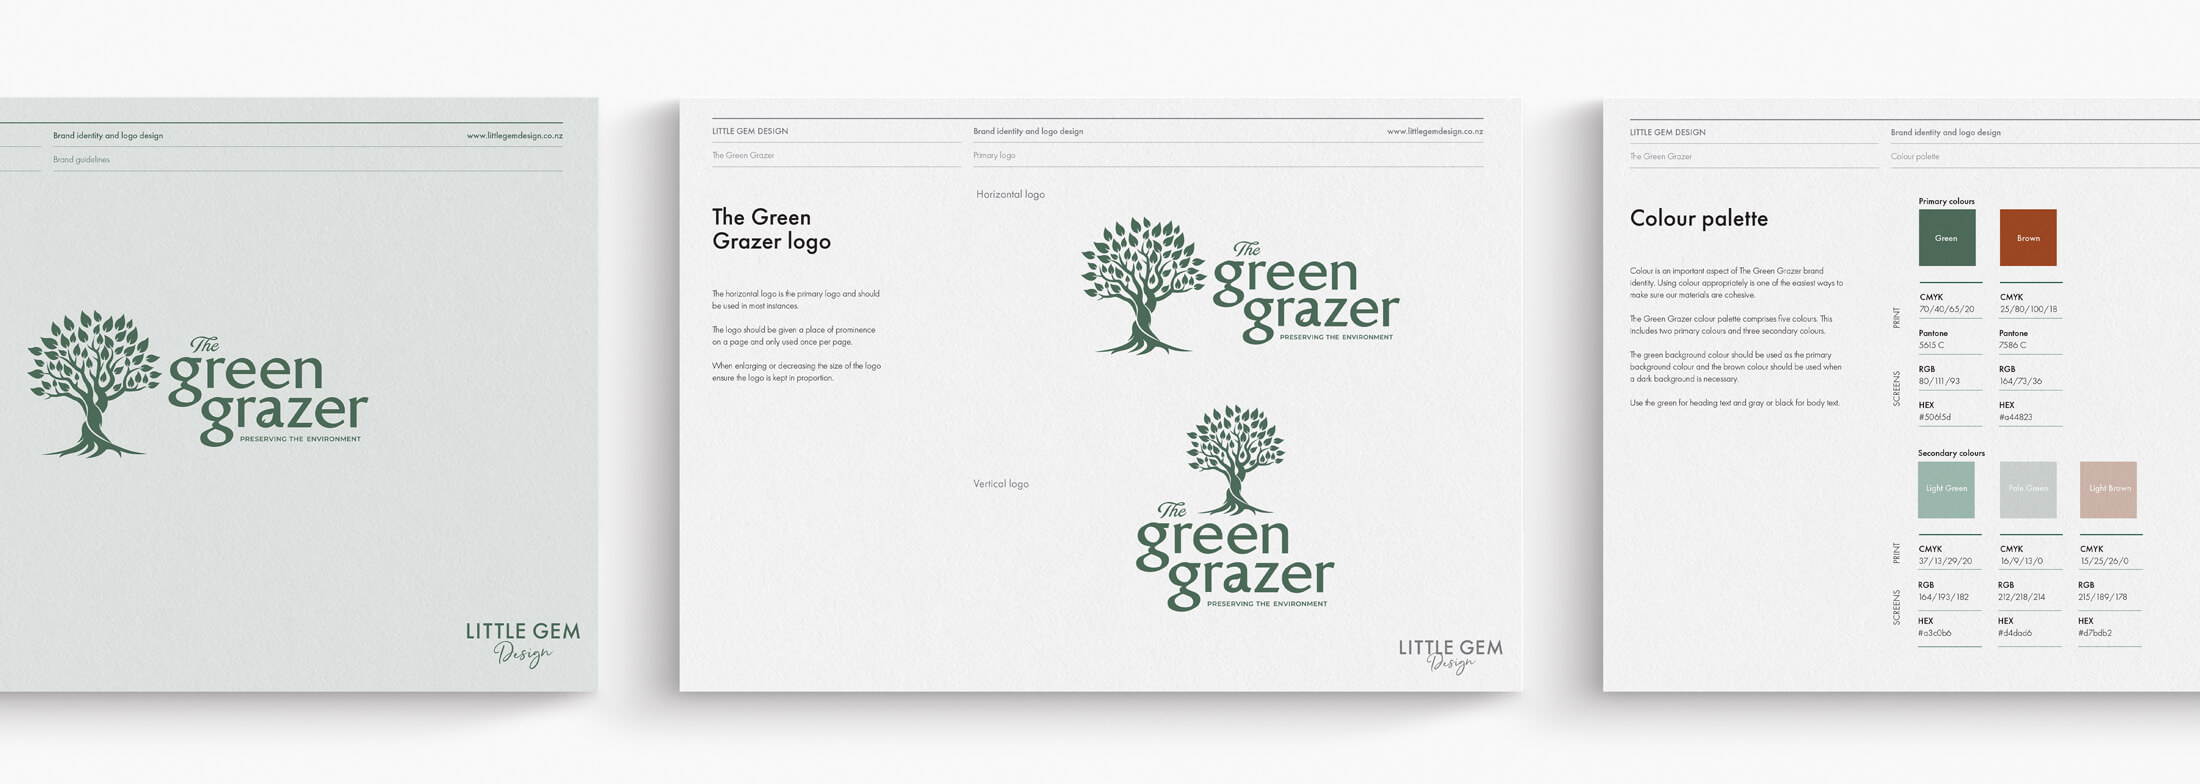 Green Grazer brand guidelines